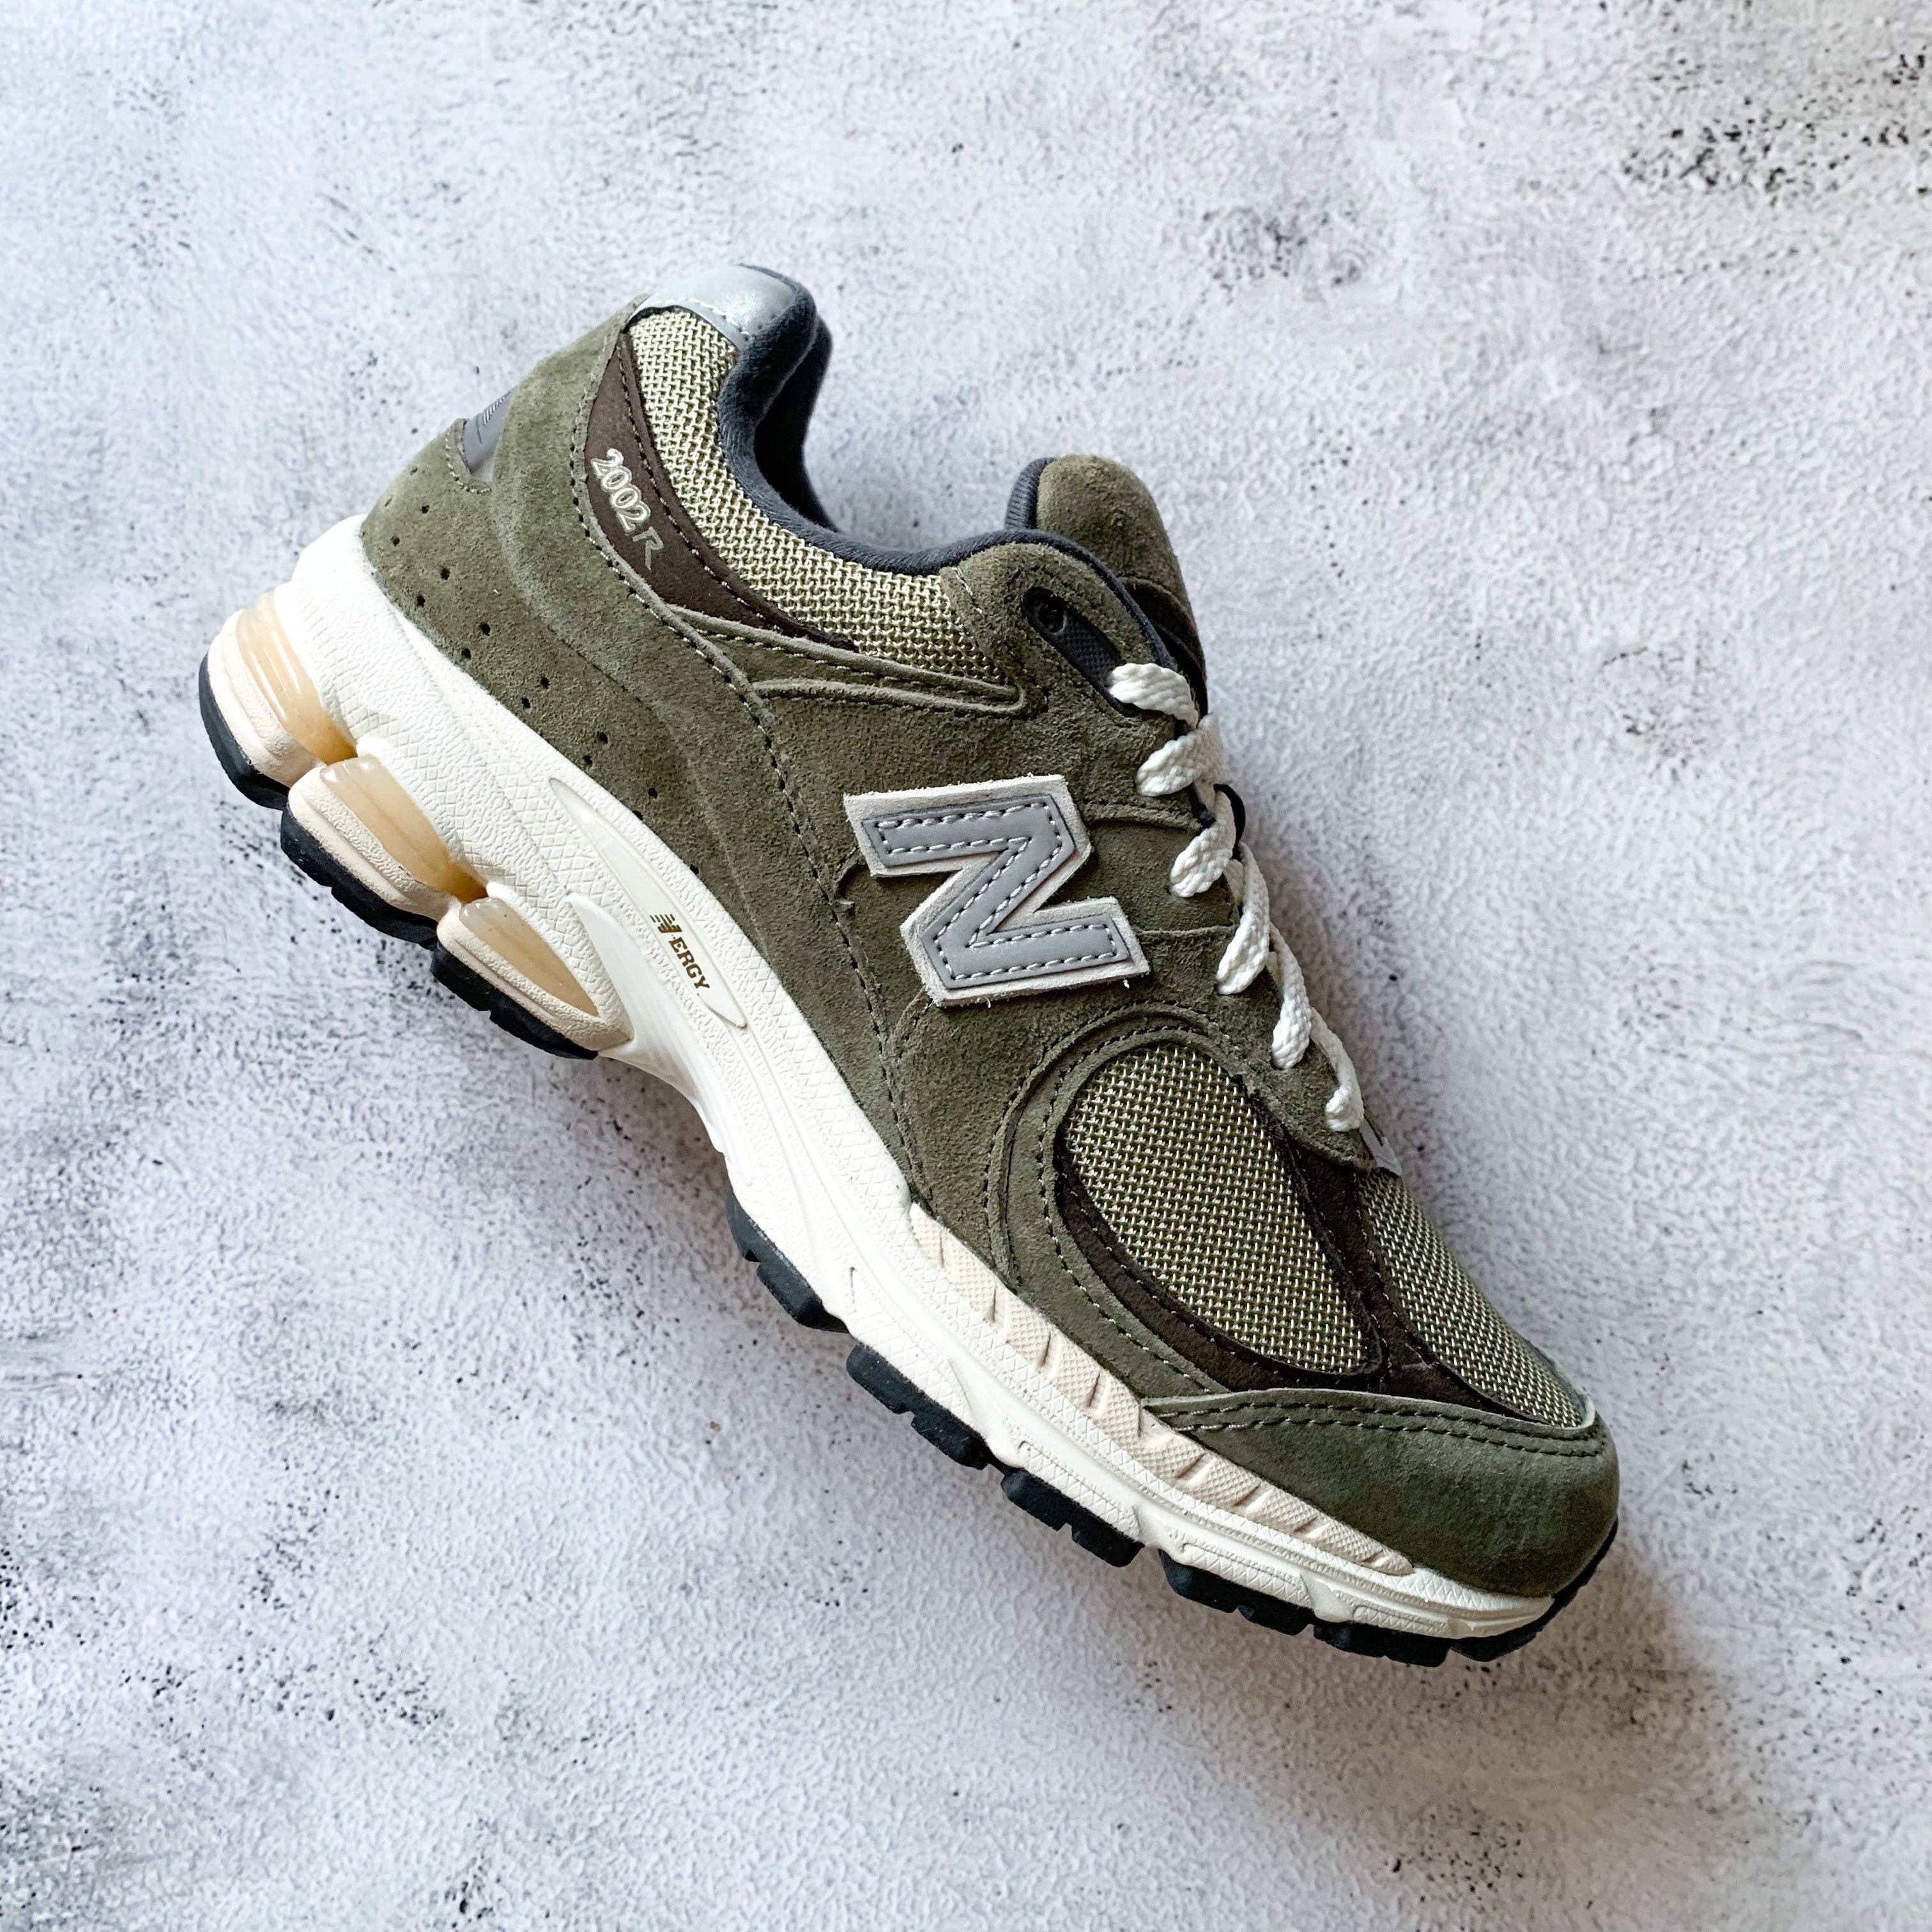 New Balance “Dark Camo” Sneakers